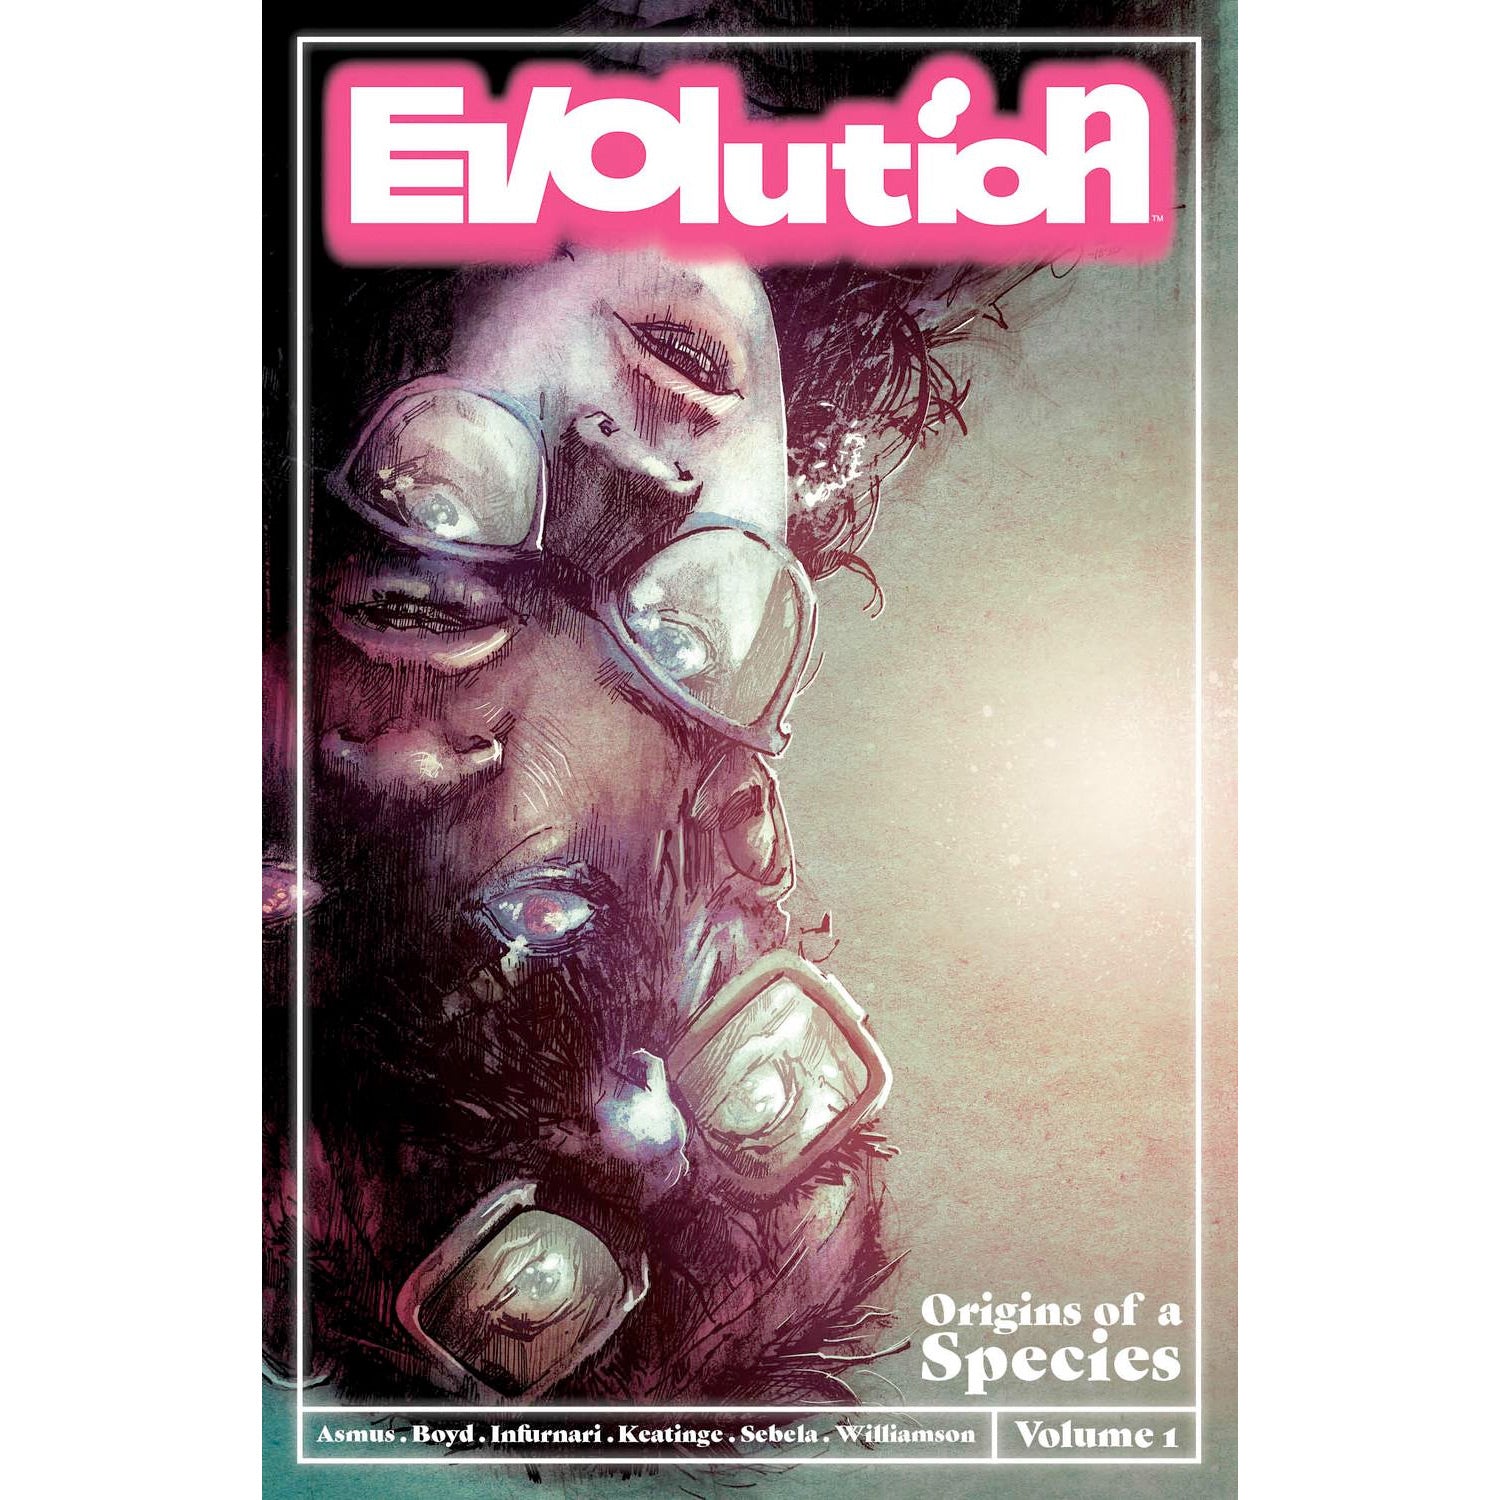 EVOLUTION Volume 1 - "Origins of a Species"